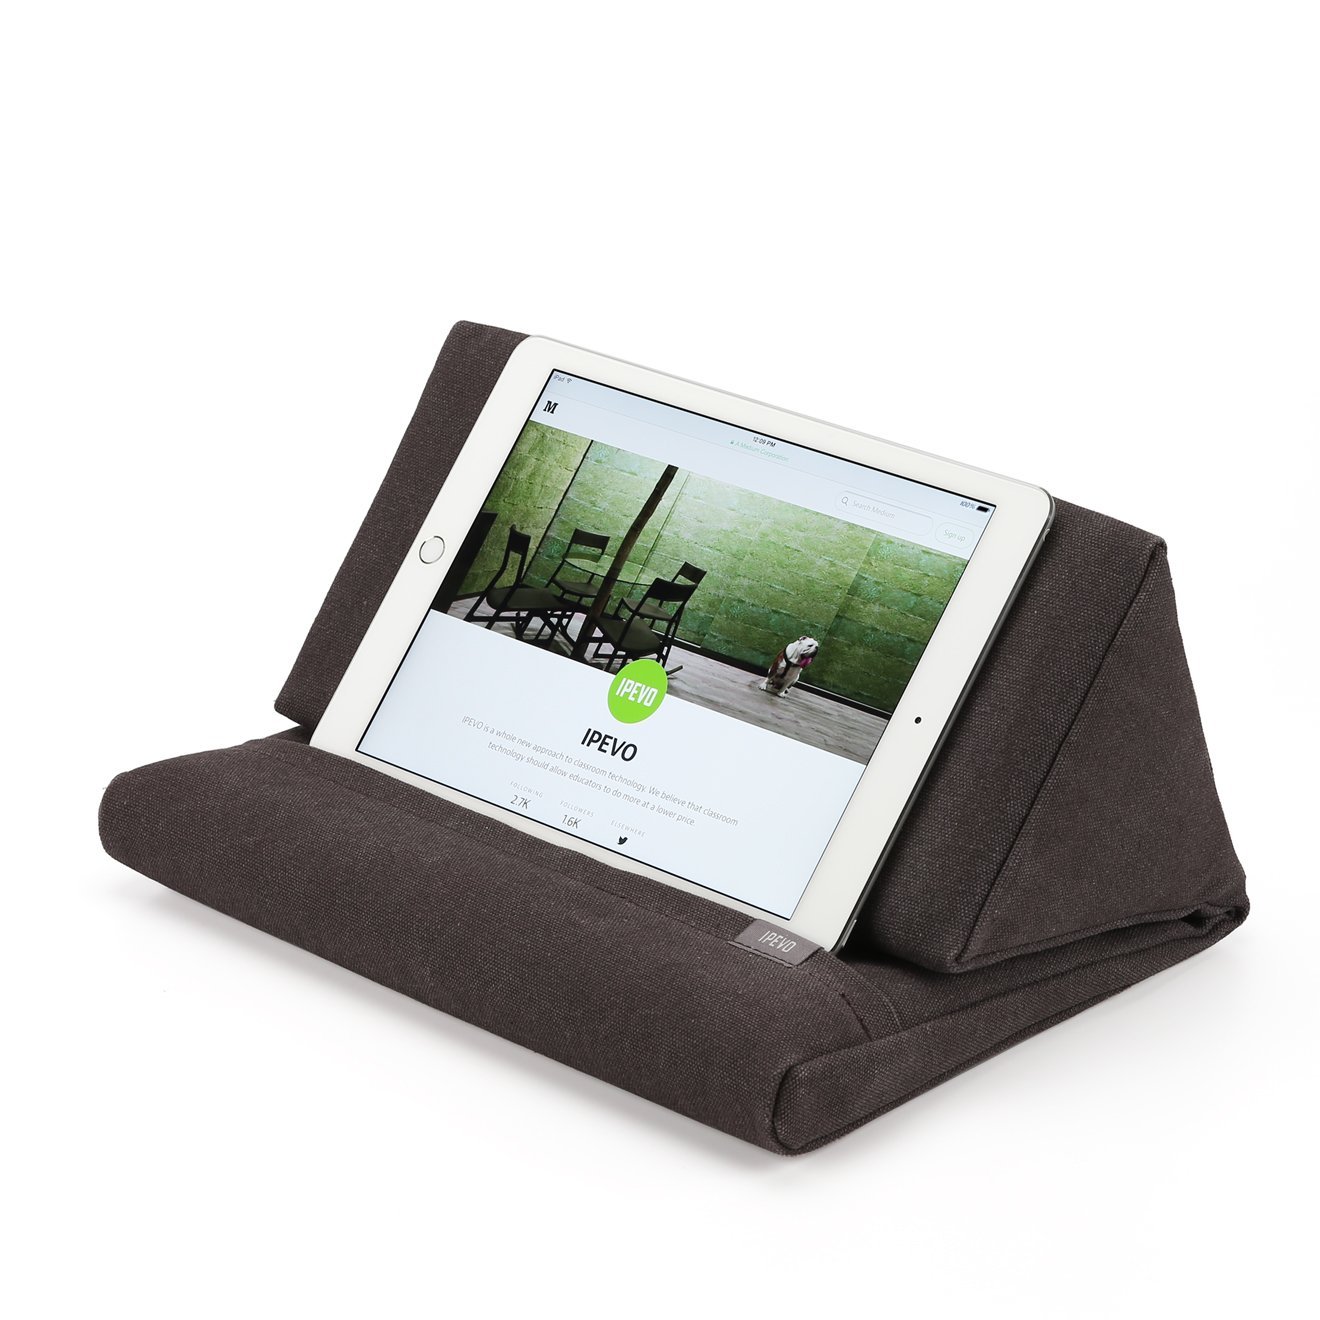 iPad stand iPad pillow iPad pillow lap pillow designed for iPad iPad wedge 